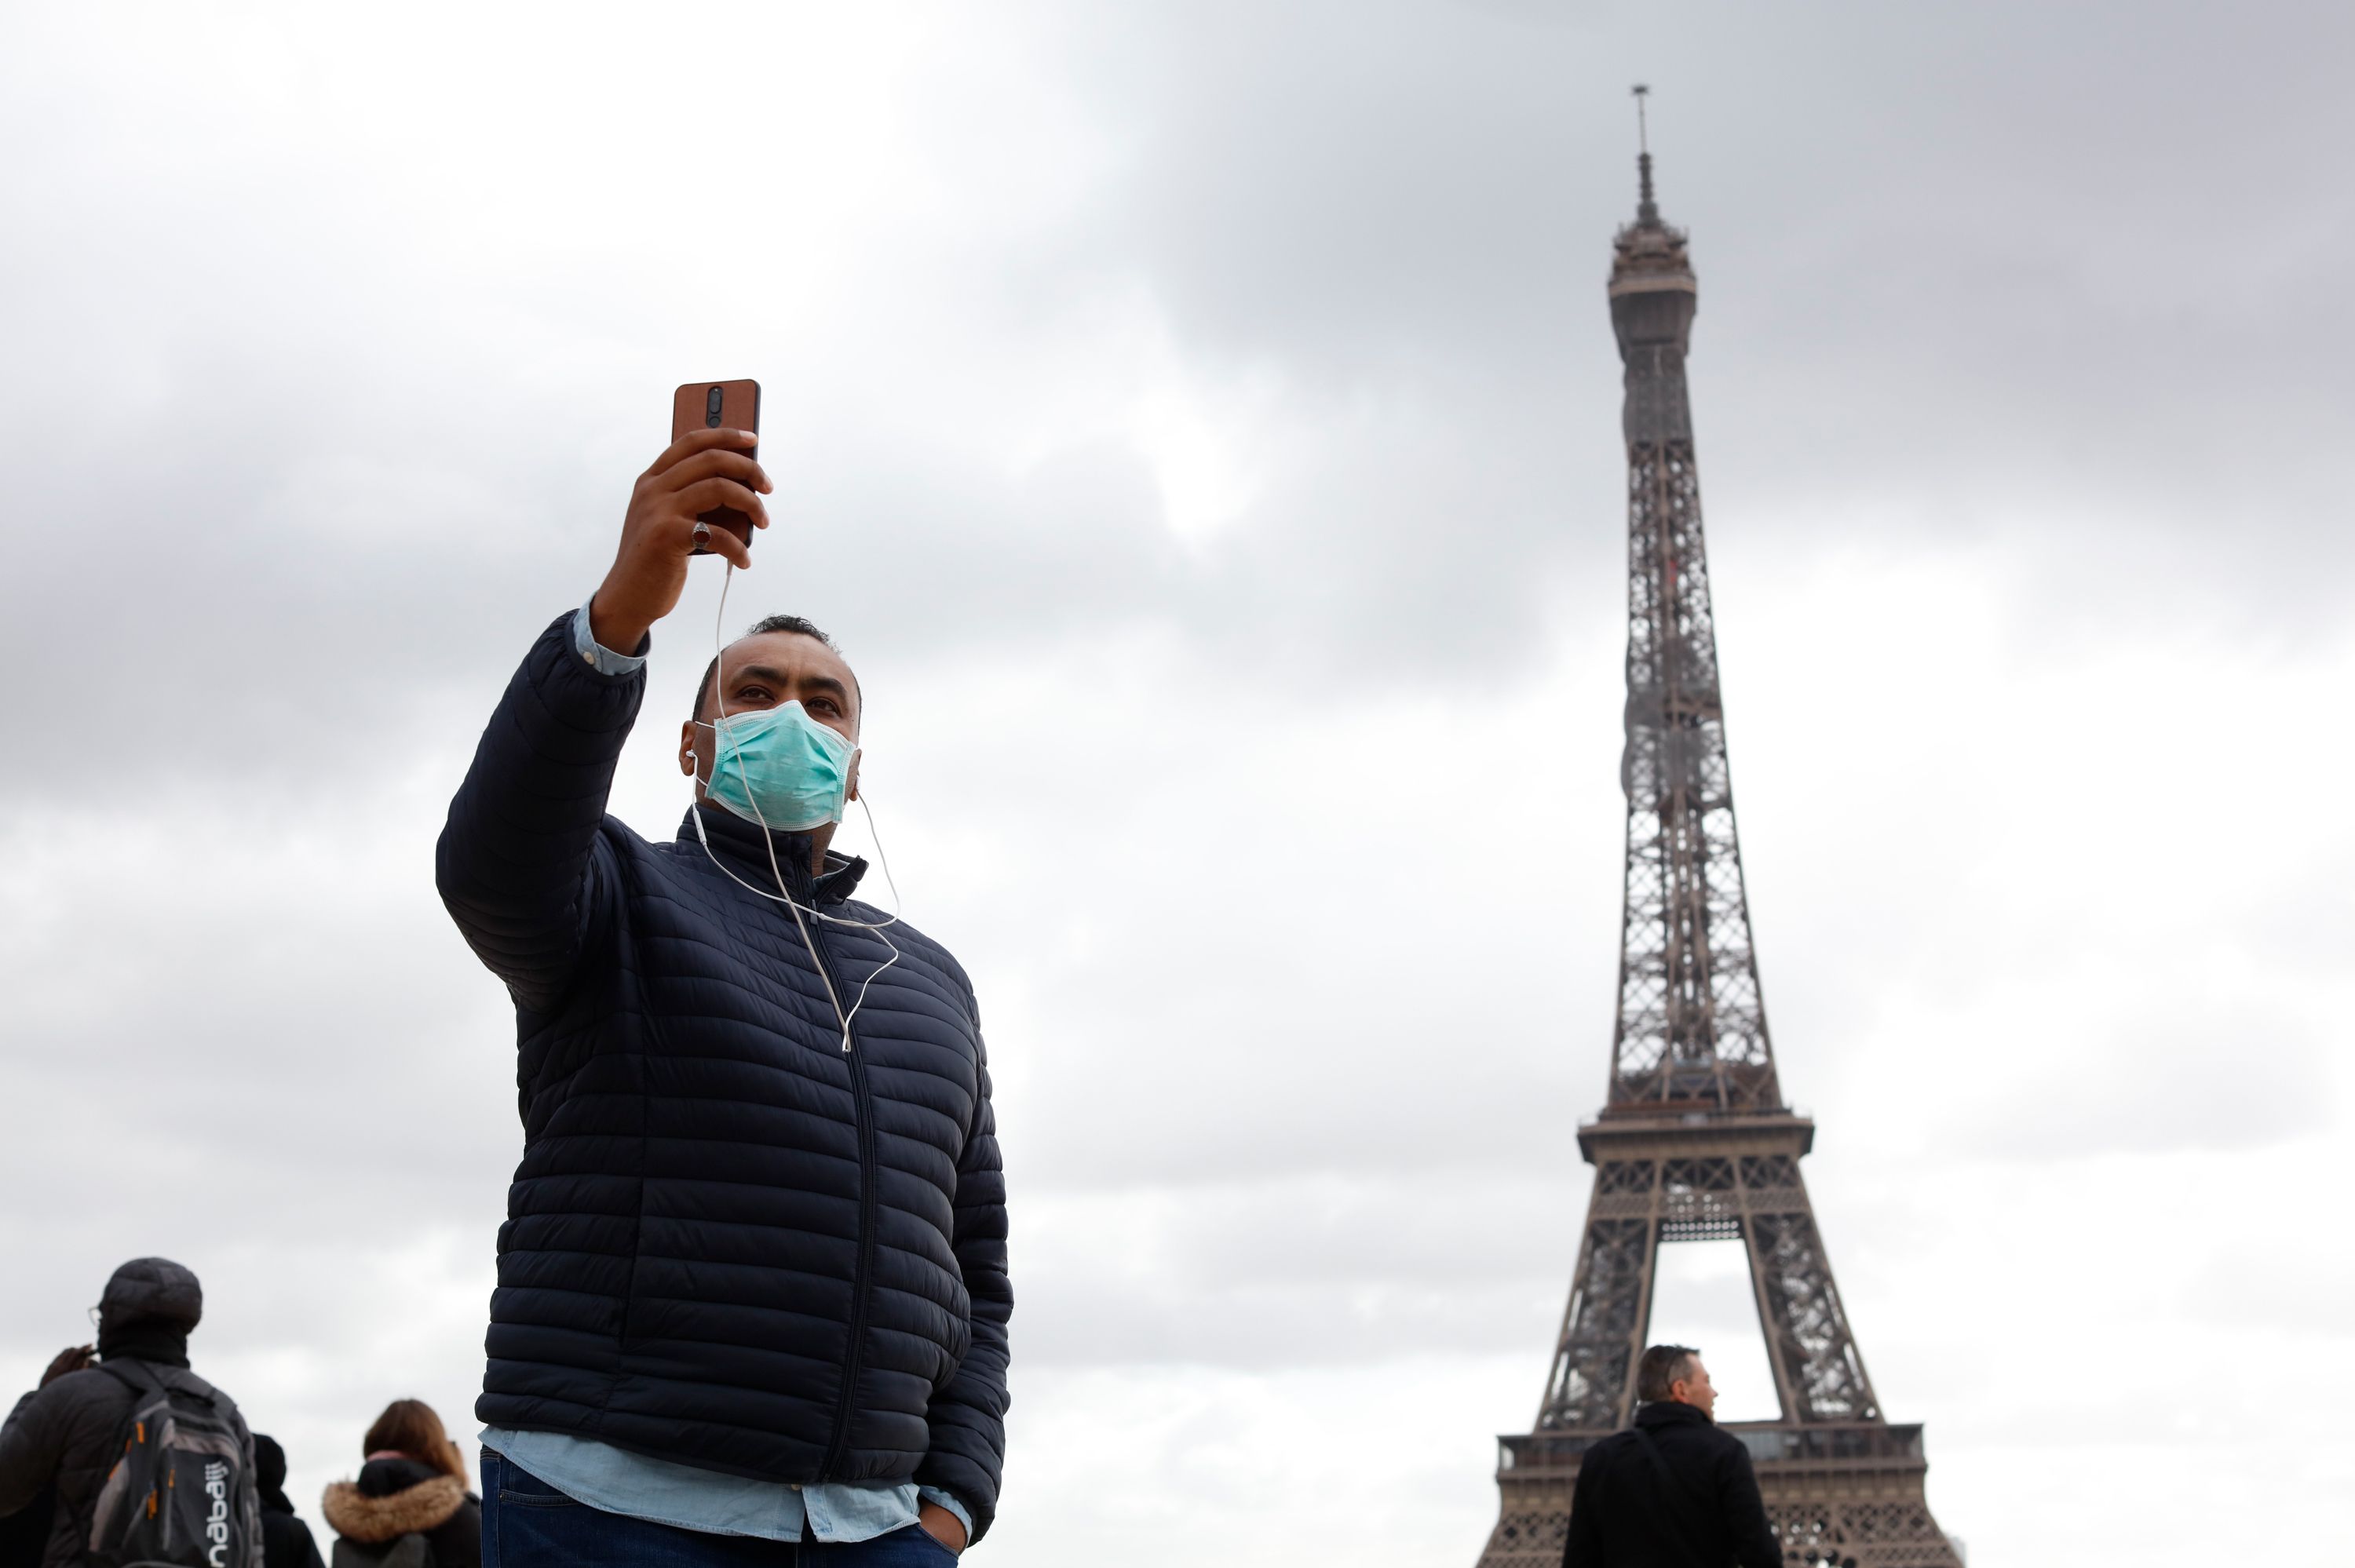 Tourist taking selfie in front of Eiffel Tower